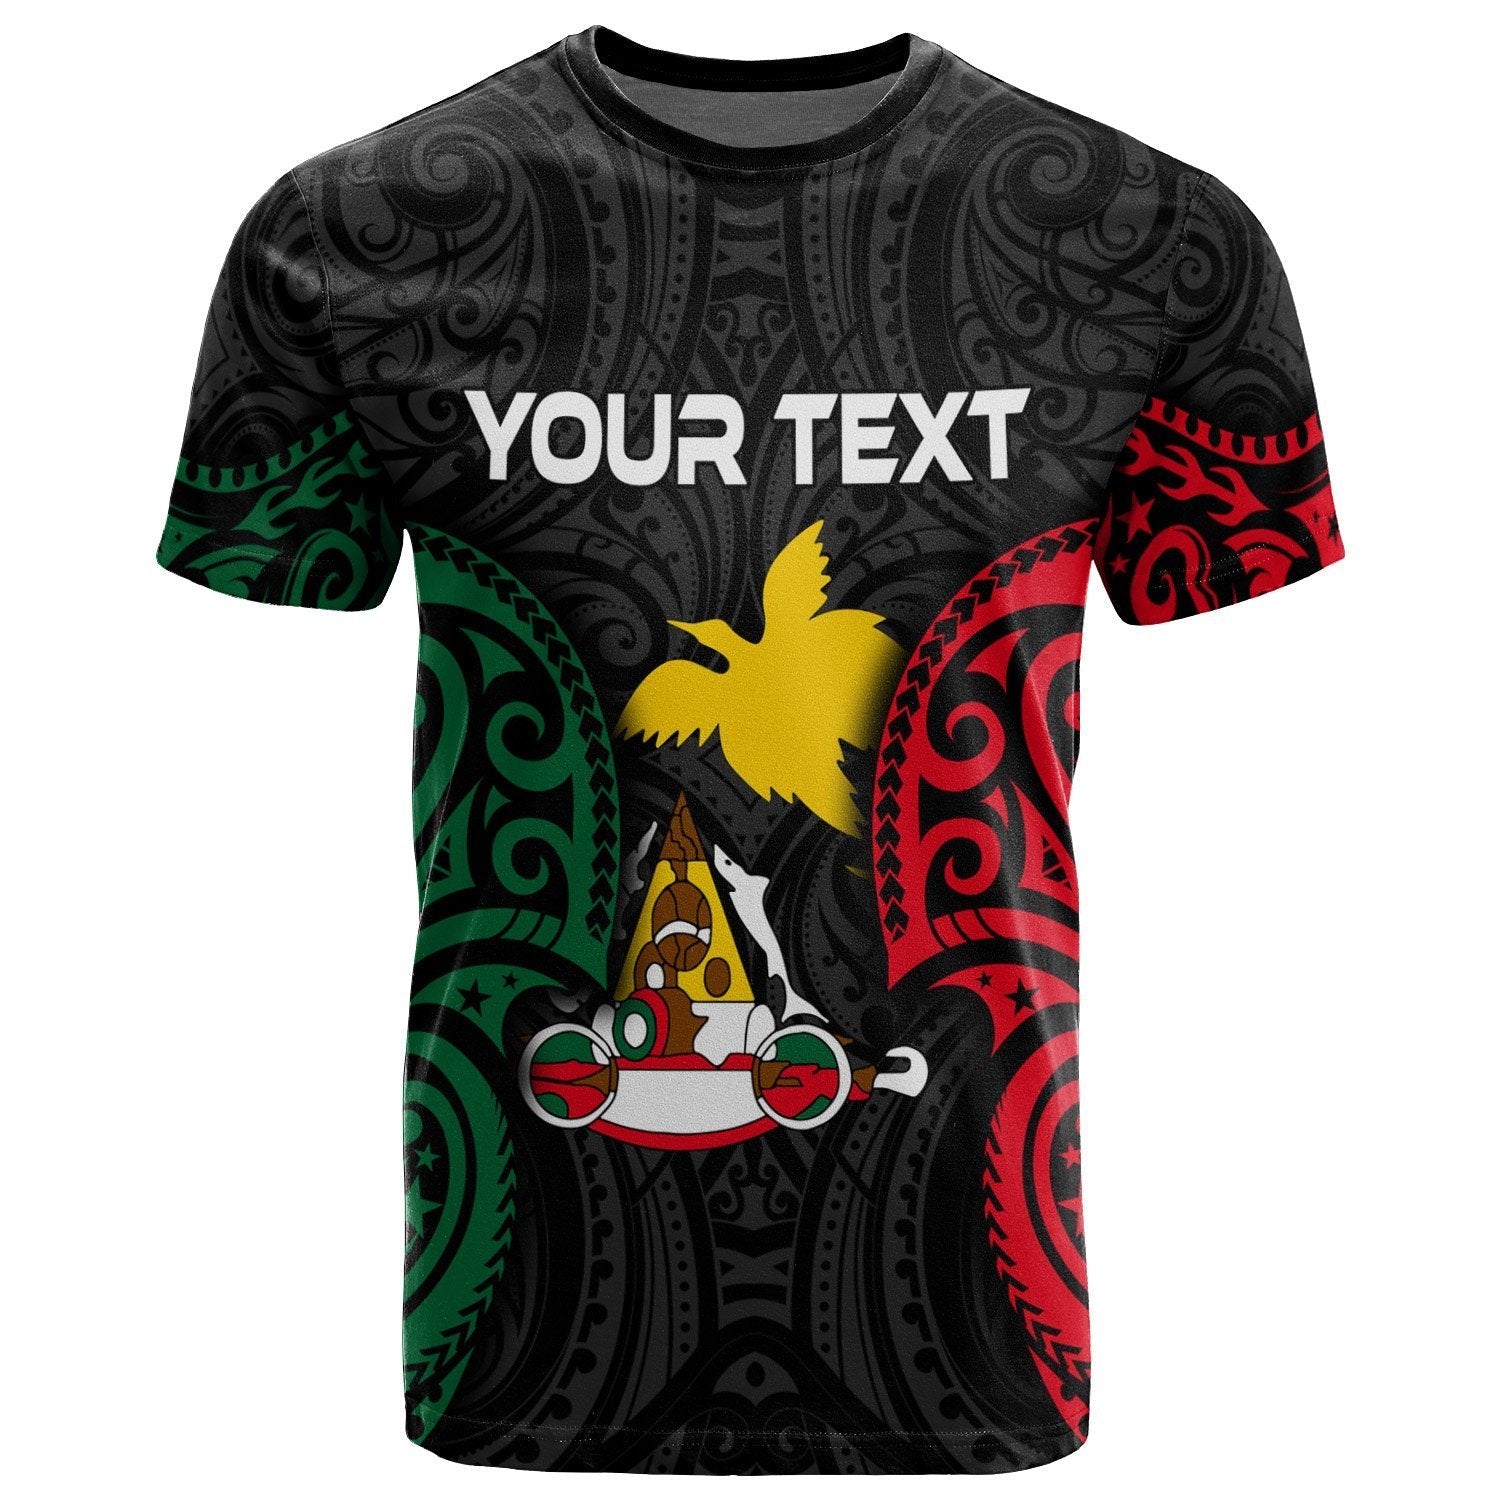 papua-new-guinea-east-sepik-province-polynesian-custom-personalised-t-shirt-spirit-version